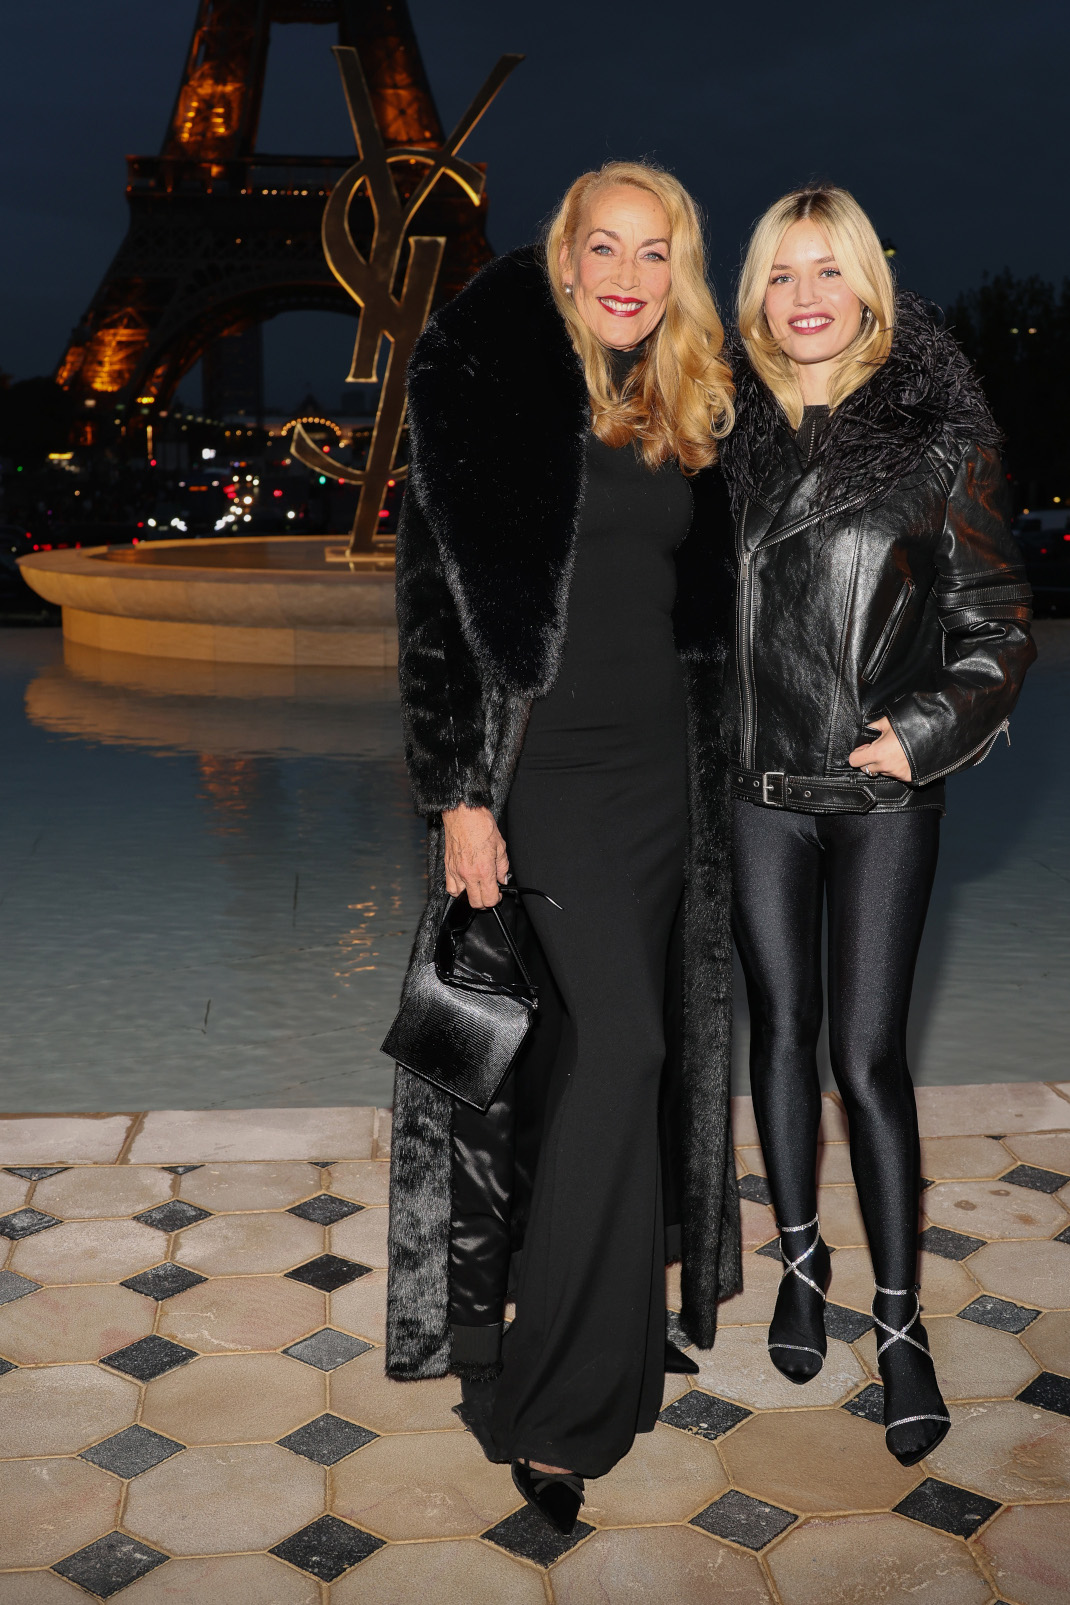 H Tζέρι Χολ με την κόρη της, Τζόρτζια Μέι Τζάγκερ, στην επίδειξη του Saint Laurent στο Παρίσι 